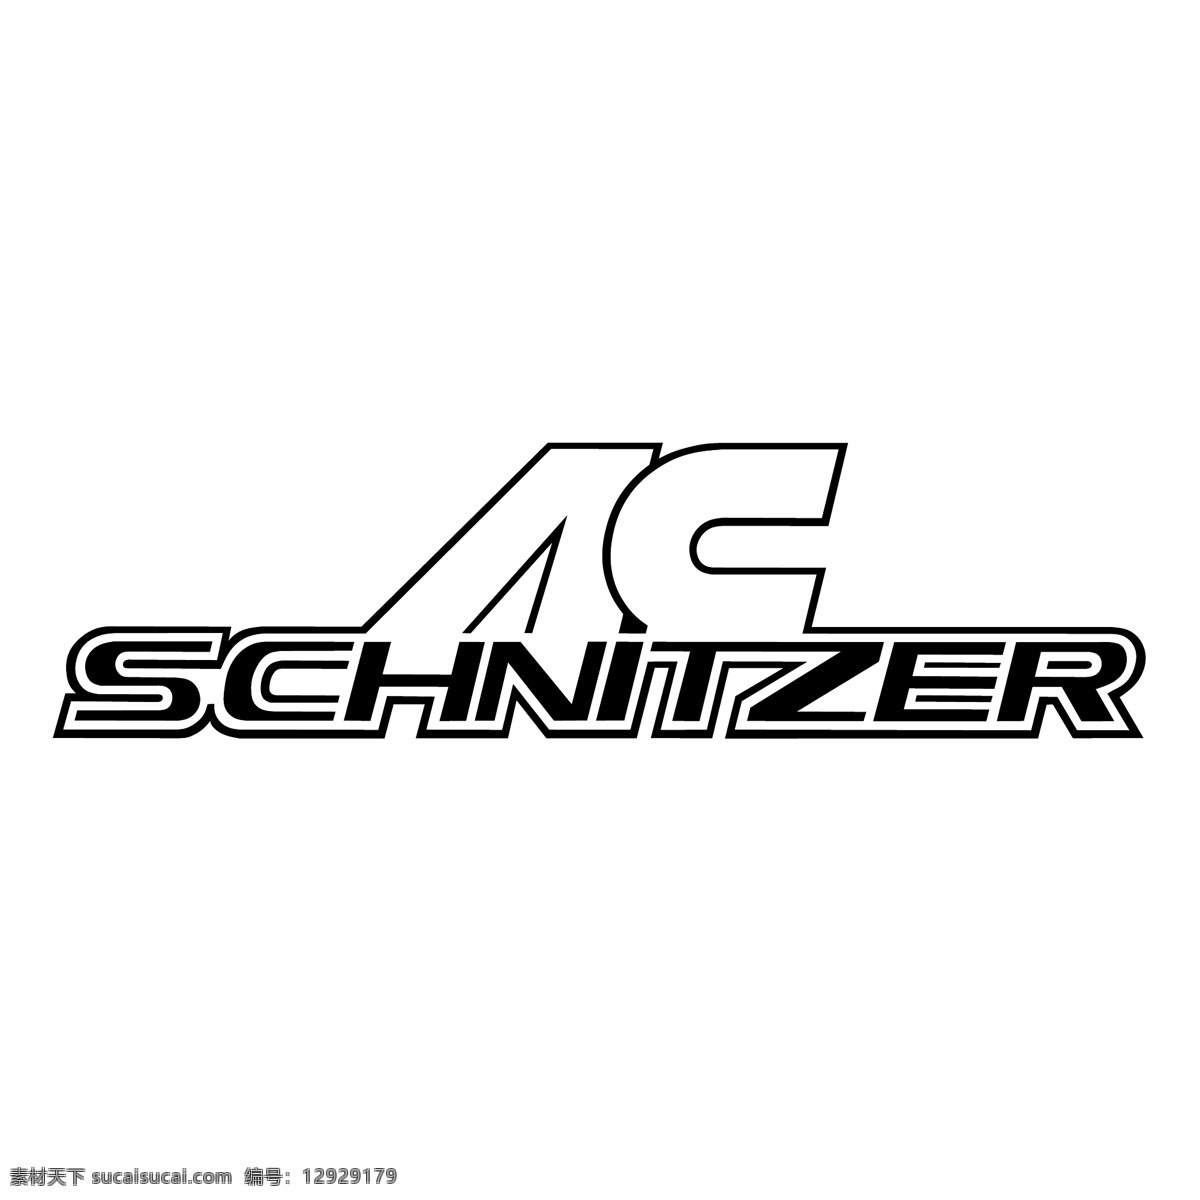 schnitzer ac acschnitzer 标志 矢量ac 向量 矢量 免费 图形 交流 交流图片 蓝色